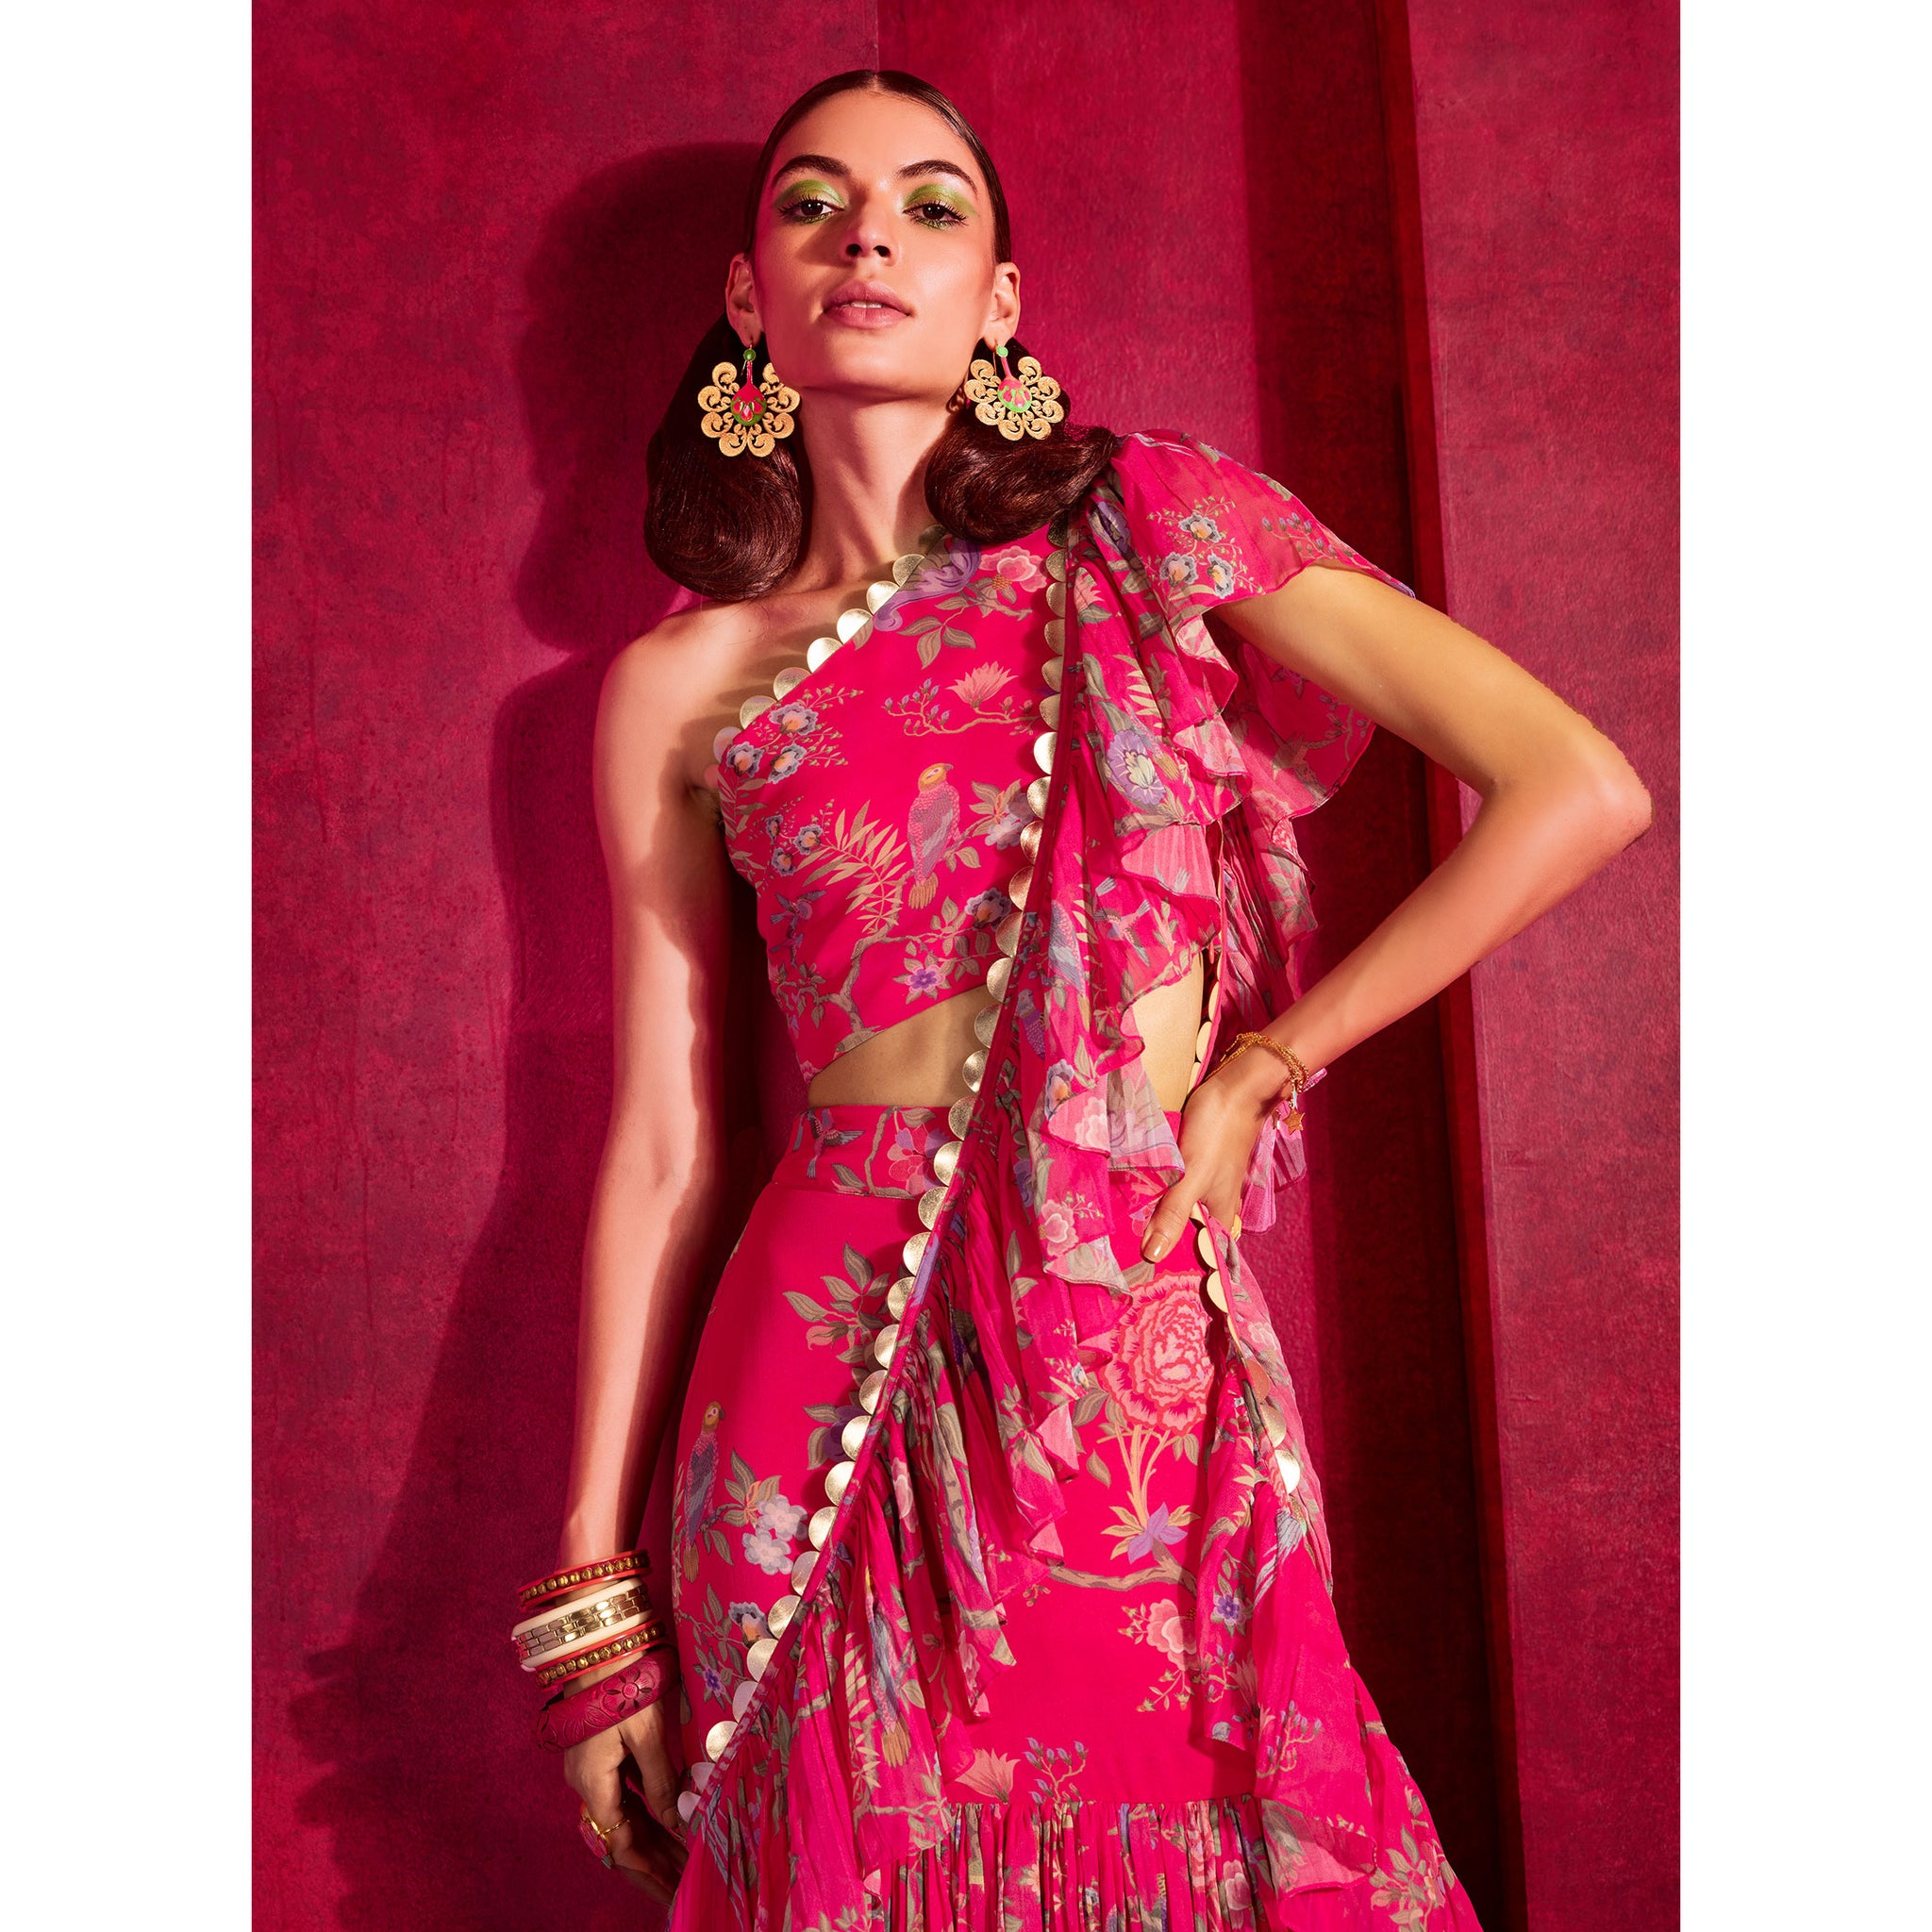 Embroidered Pre-draped Sari Gown